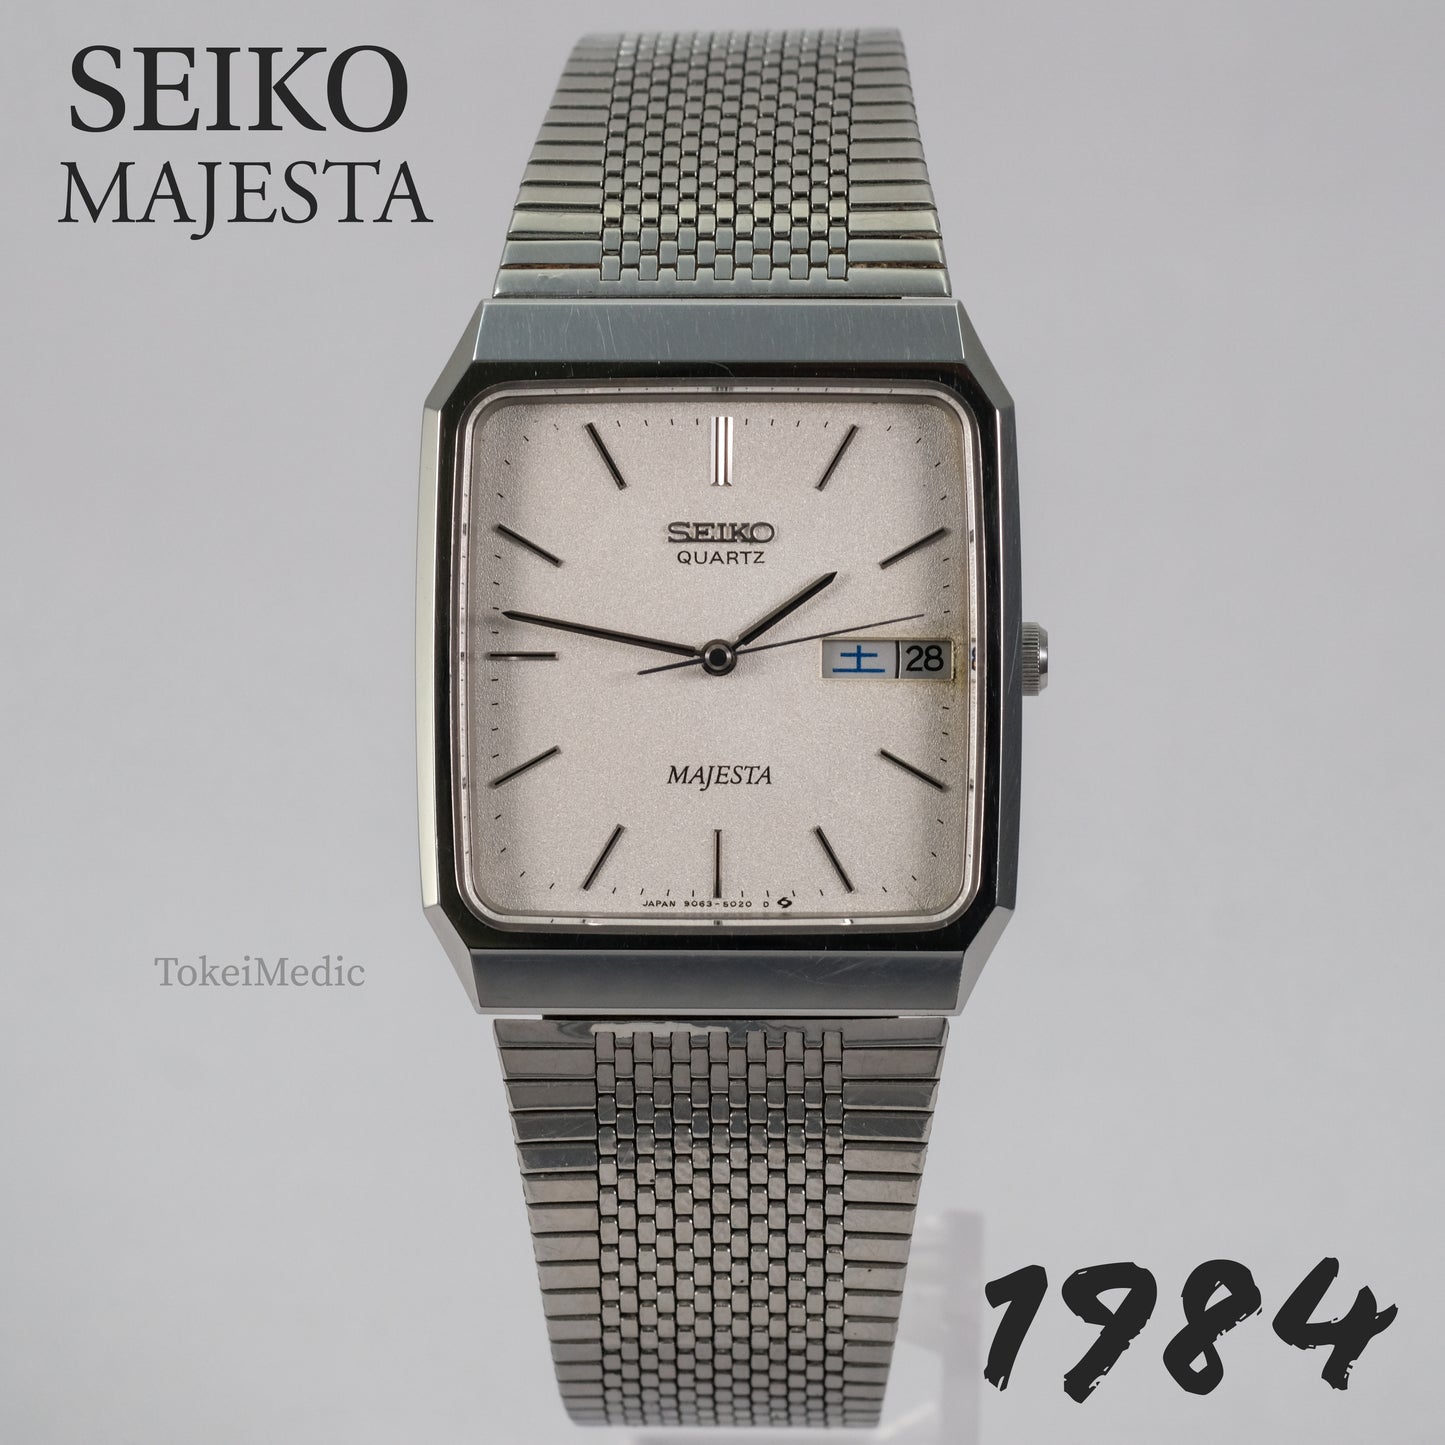 1984 Seiko Majesta 9063-5020